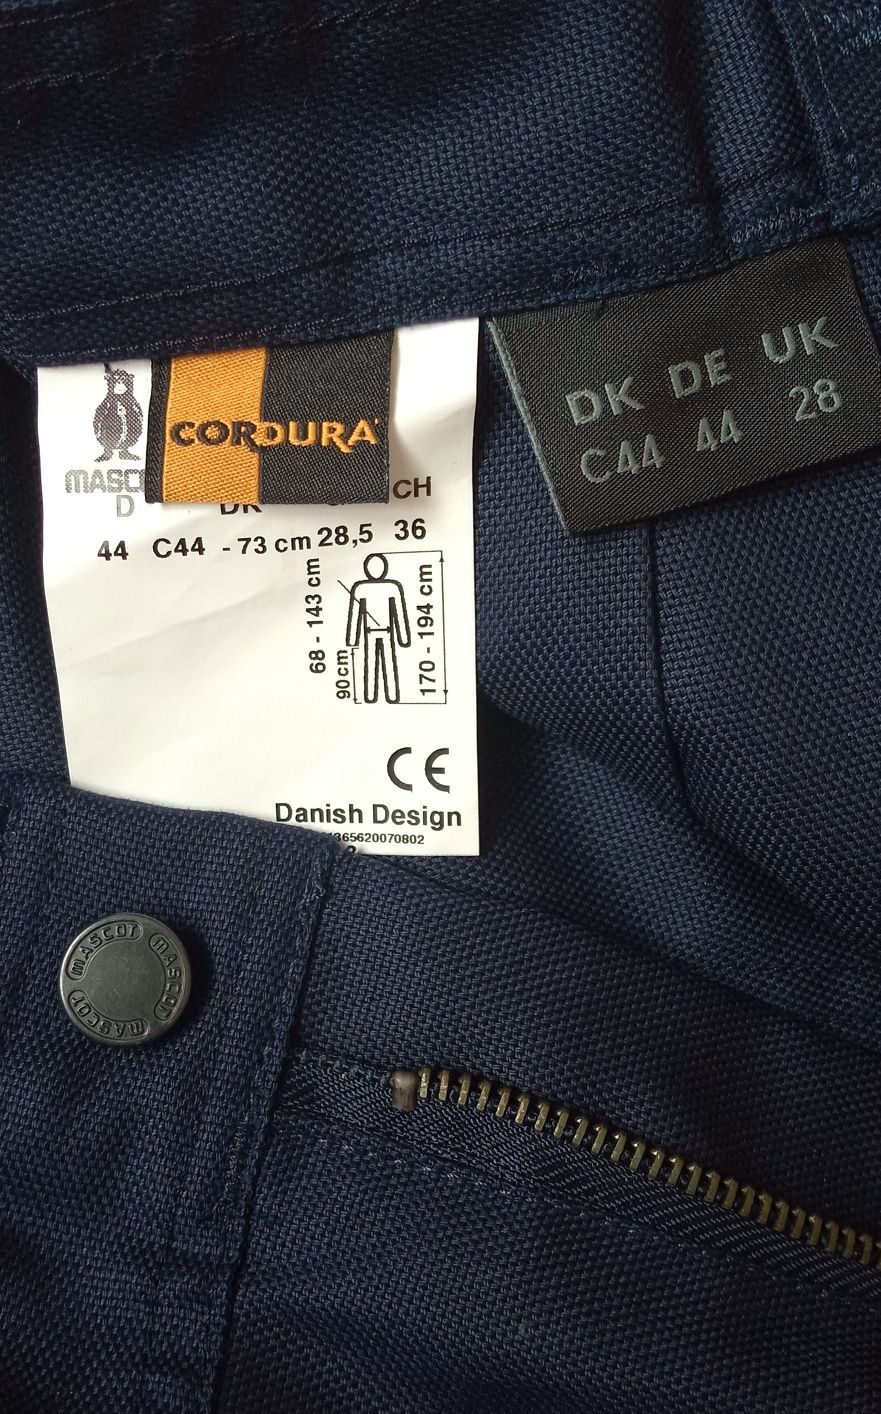 Mascot Cordura spodnie męskie granat r C44 pas szer 73-75 cm nowe